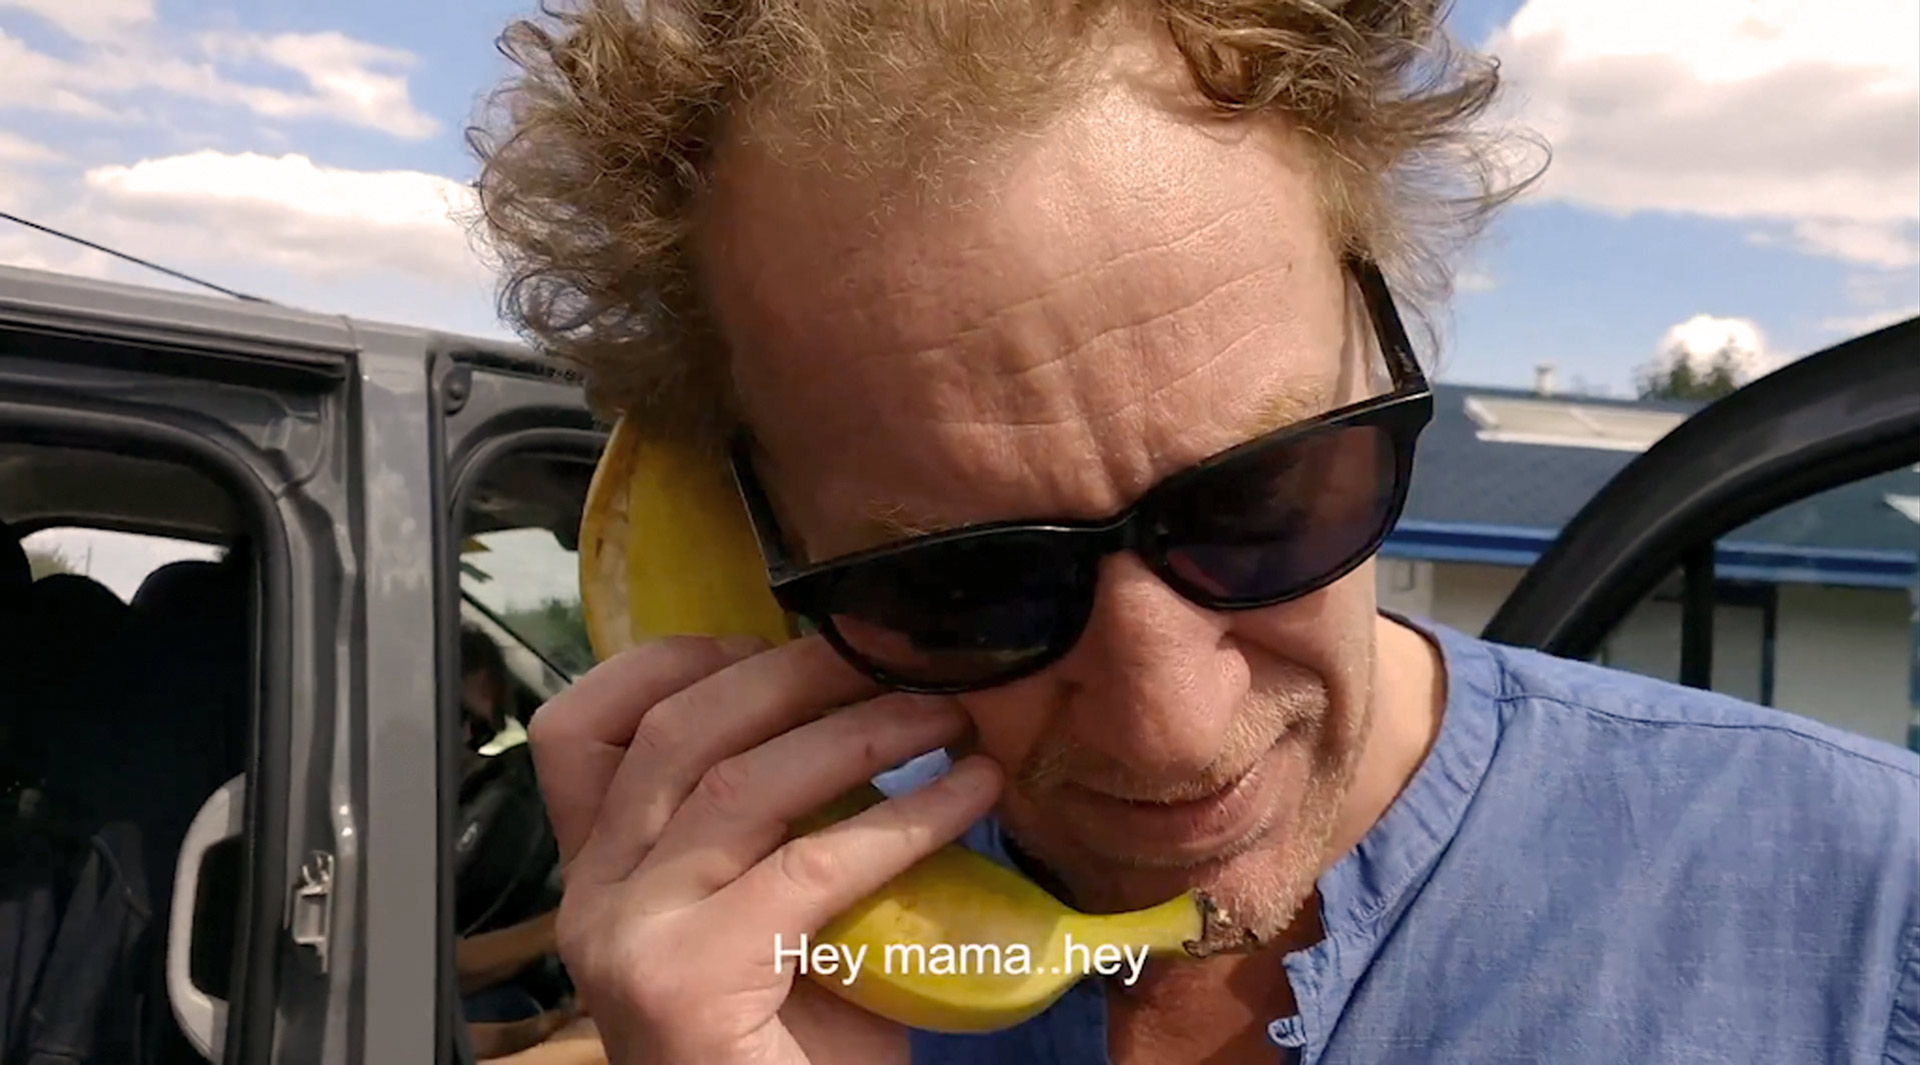 Jochen making a phone call with a banana